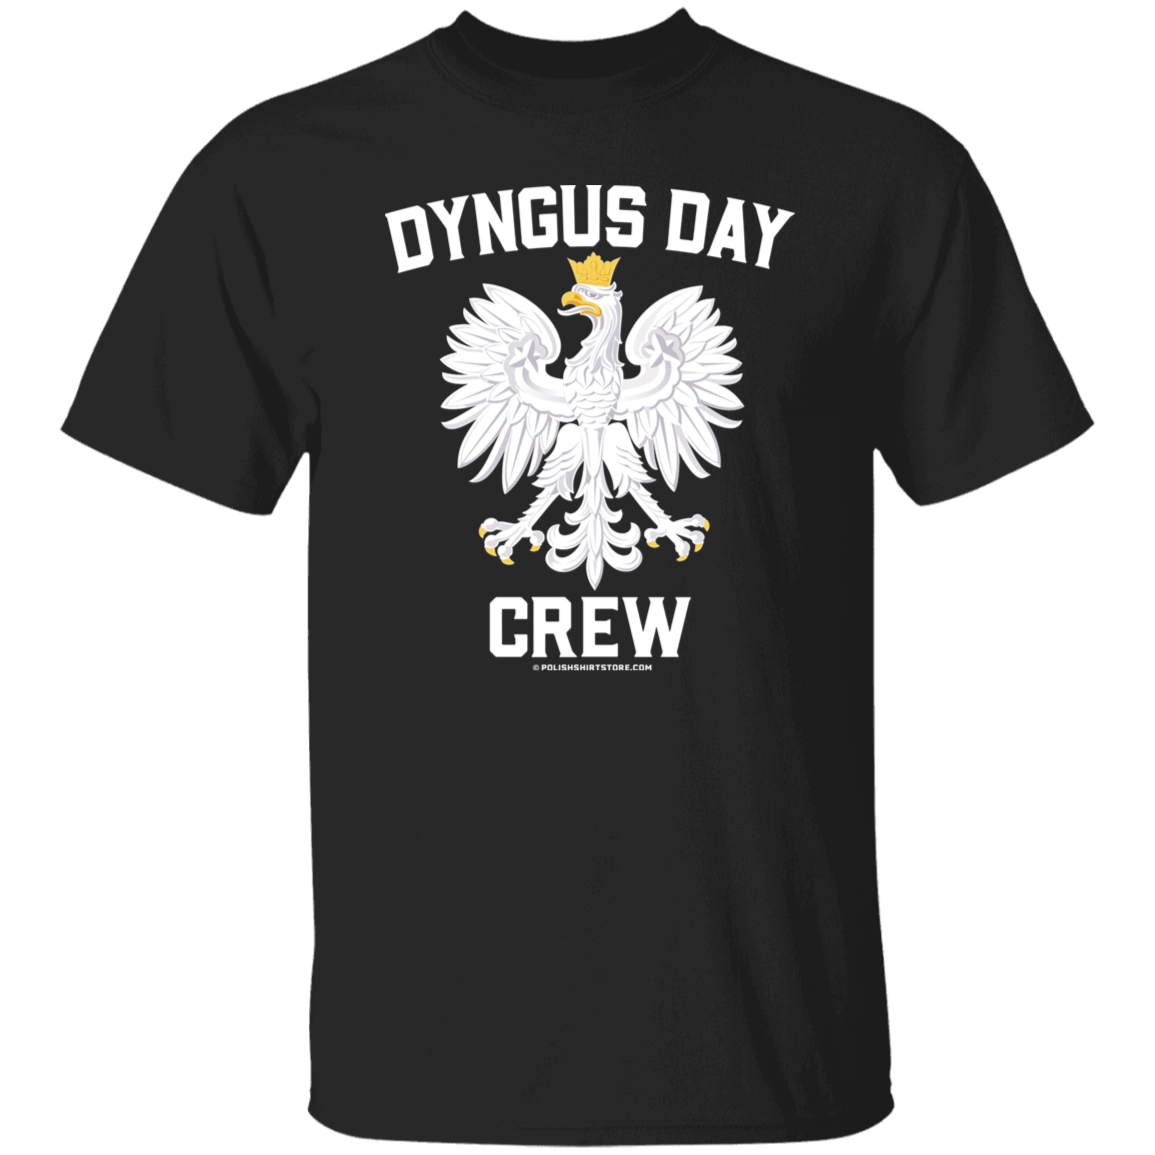 Dyngus Day Crew Apparel CustomCat G500 5.3 oz. T-Shirt Black S